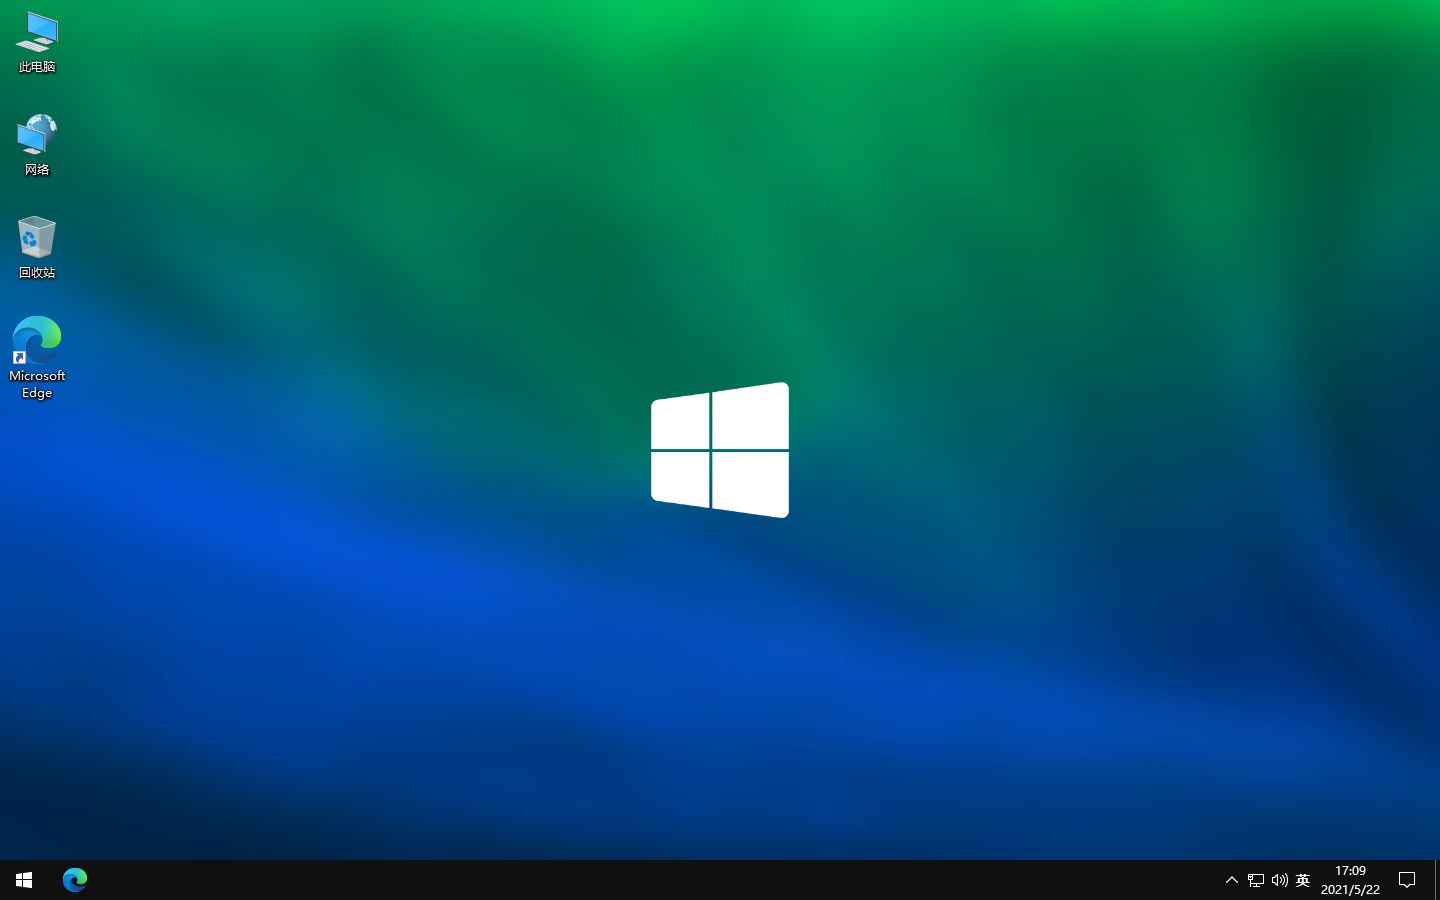 Windows10 21H1 (19043.985) V1 64位专业版